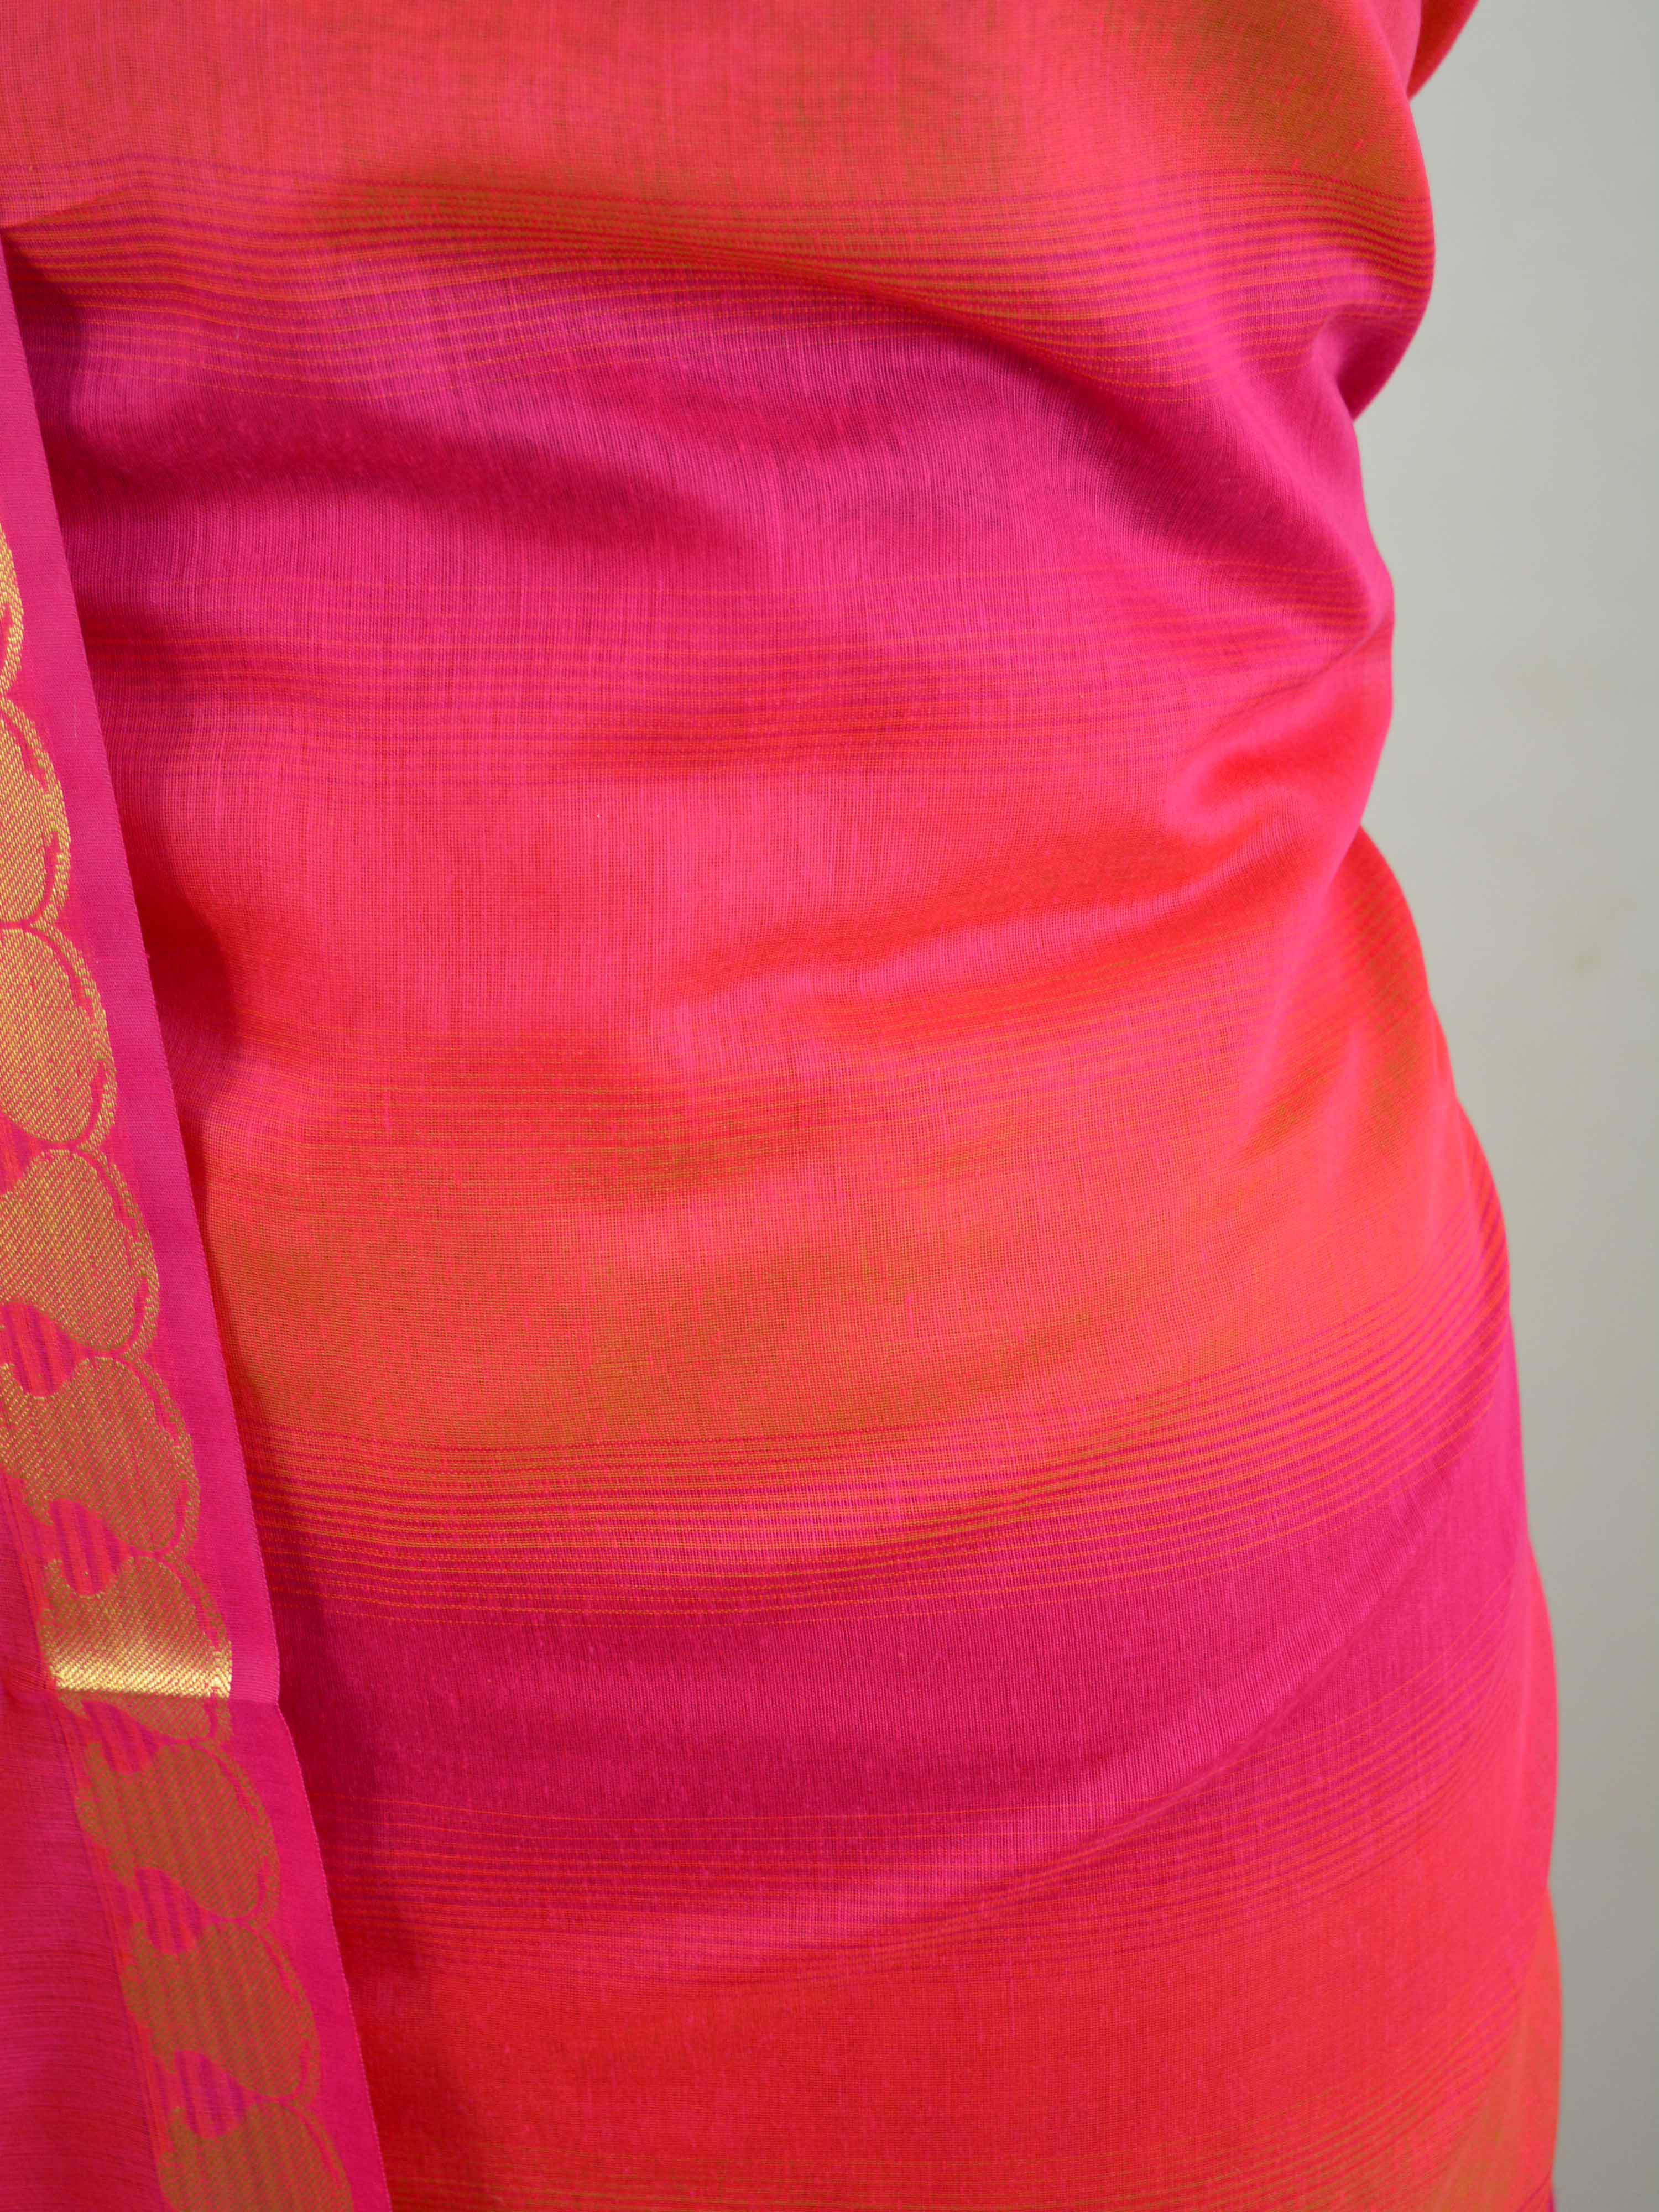 Banarasee Chanderi Cotton Stripes Salwar Kameez  Fabric With Dupatta-Pink